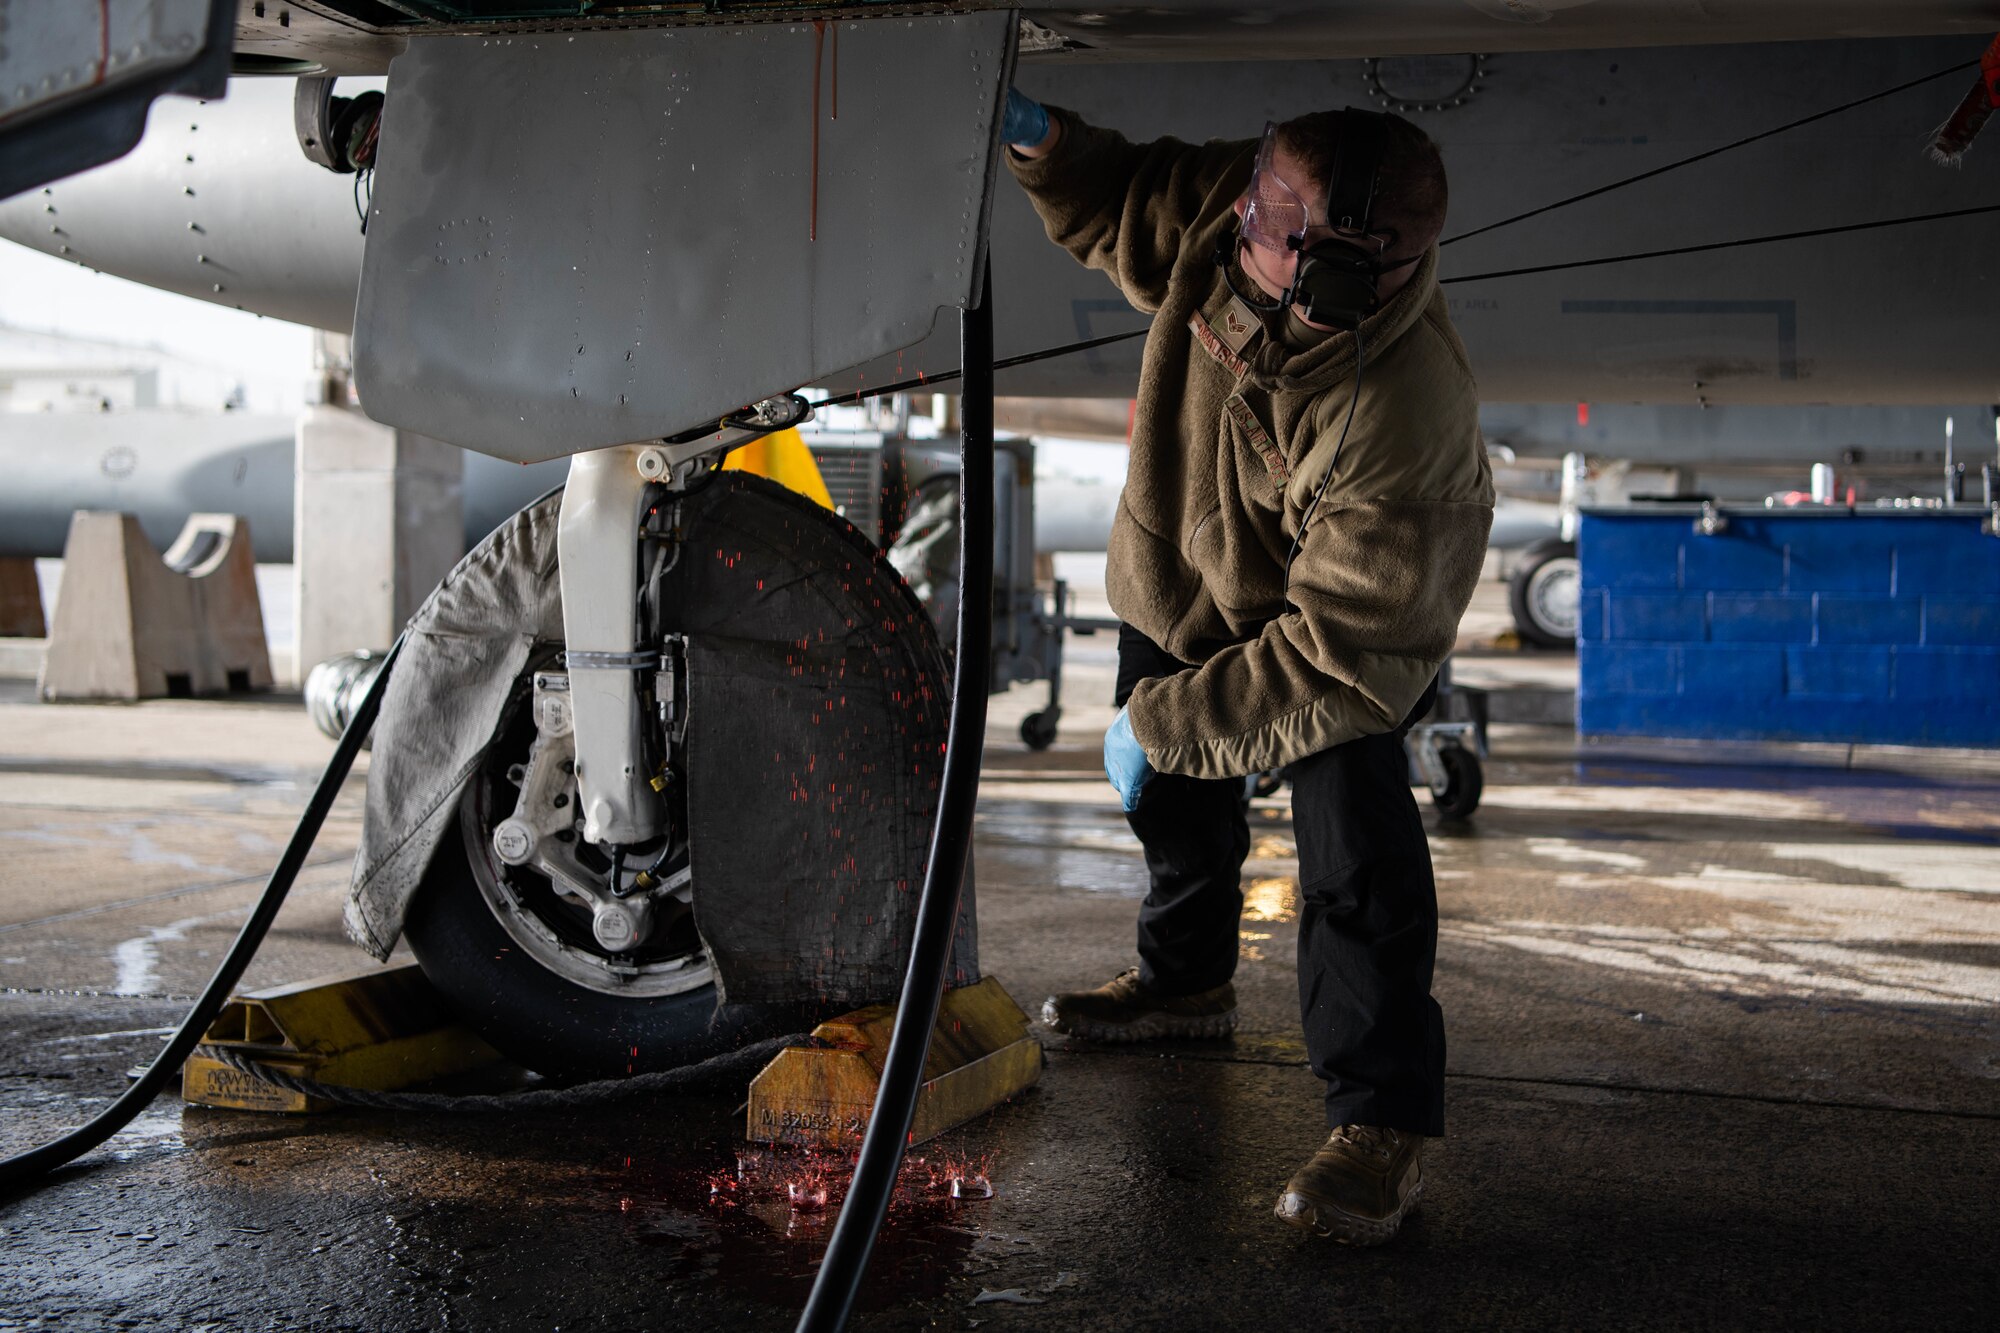 An Airman conducts aircraft maintenance.